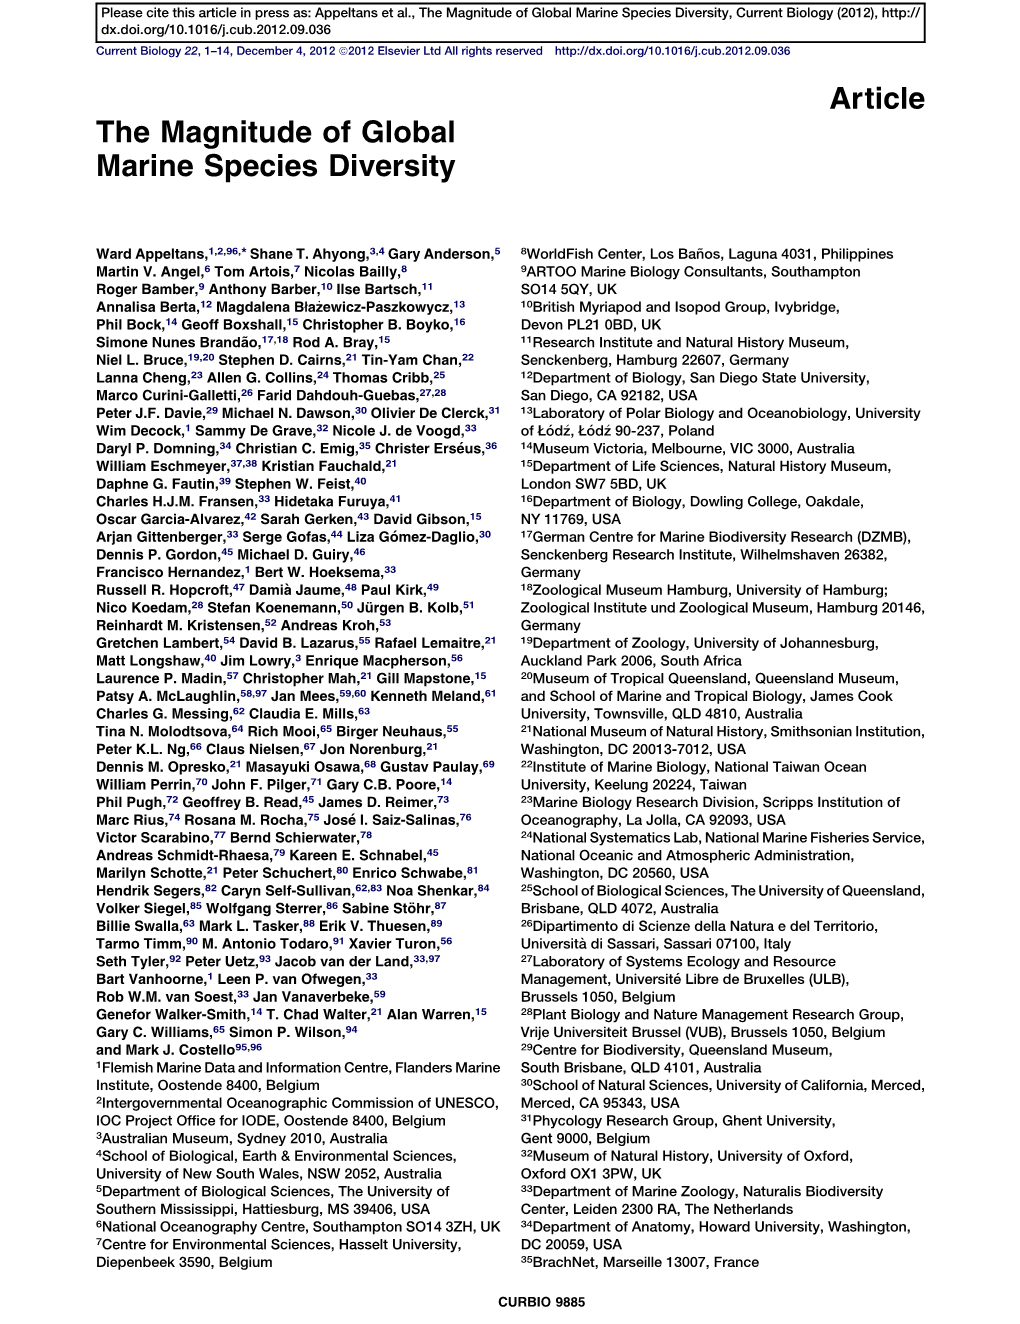 The Magnitude of Global Marine Species Diversity